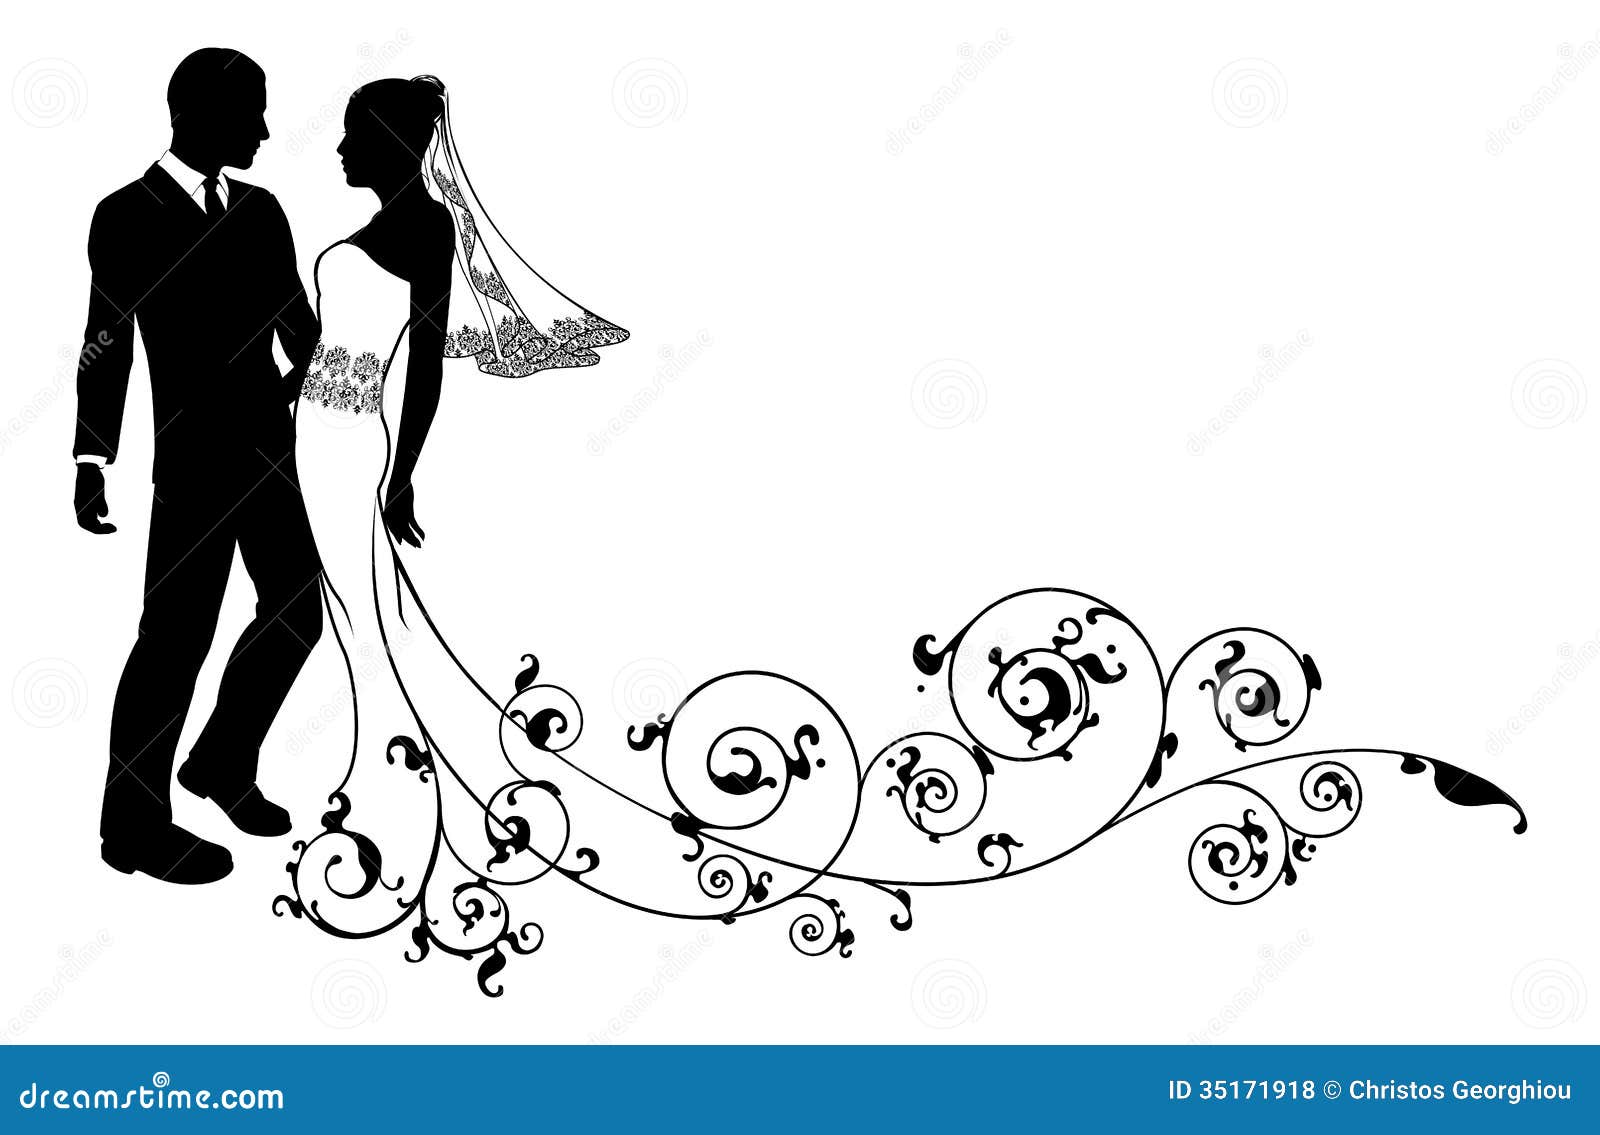 free wedding couple silhouette clip art - photo #39